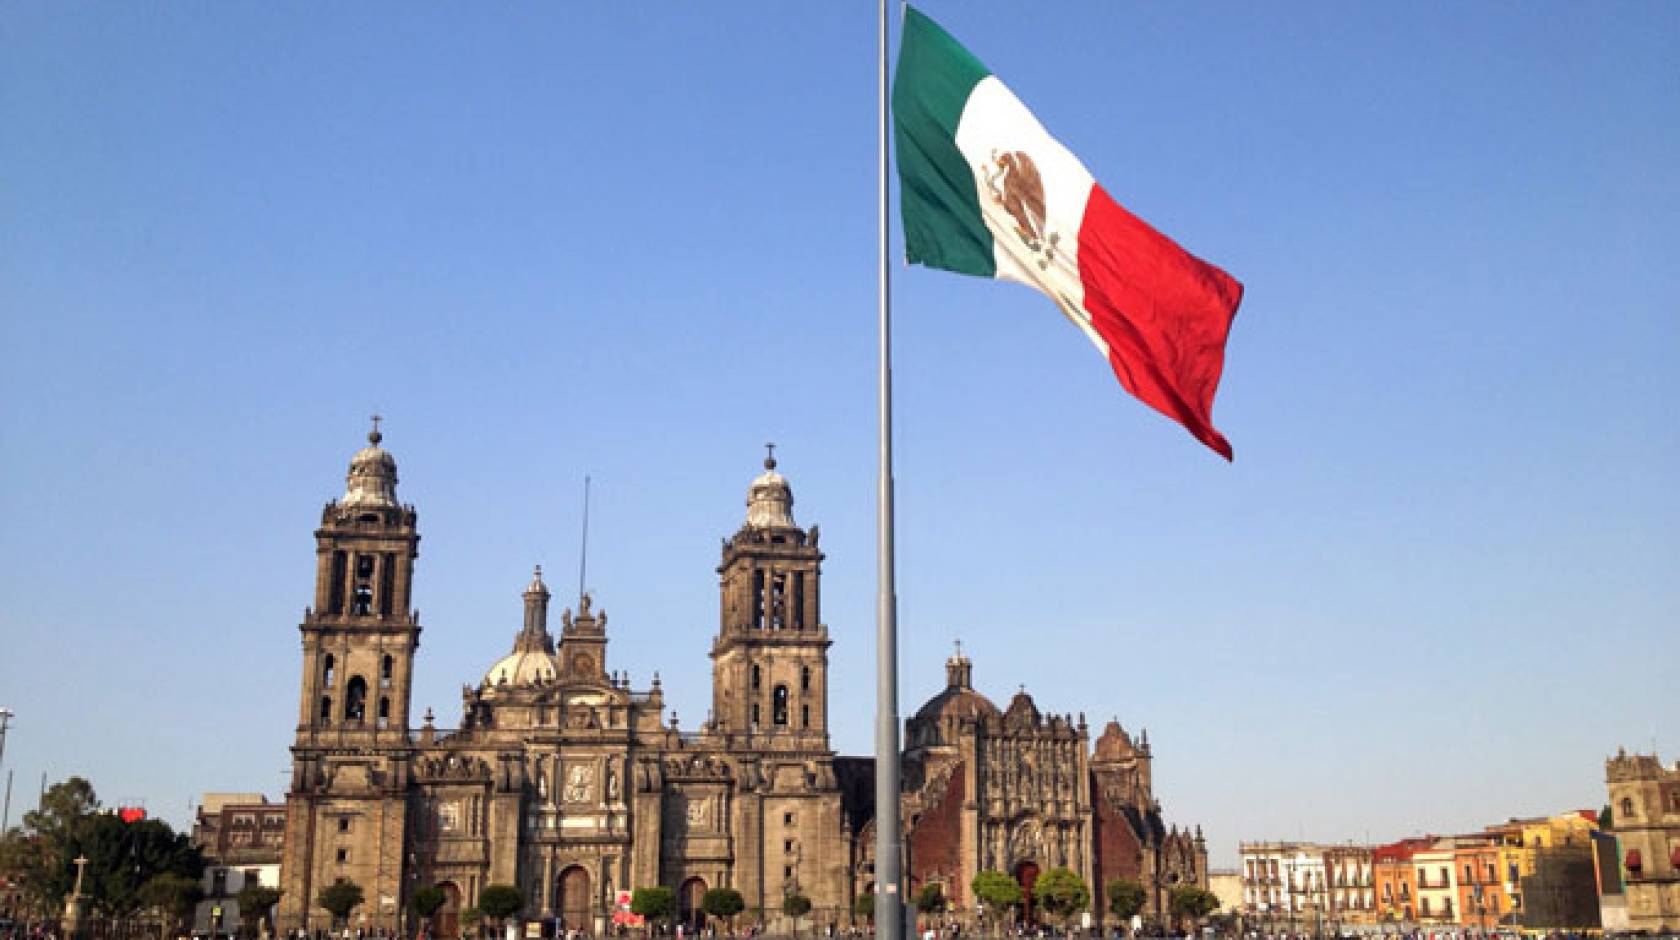 Zocalo Square, Mexico City